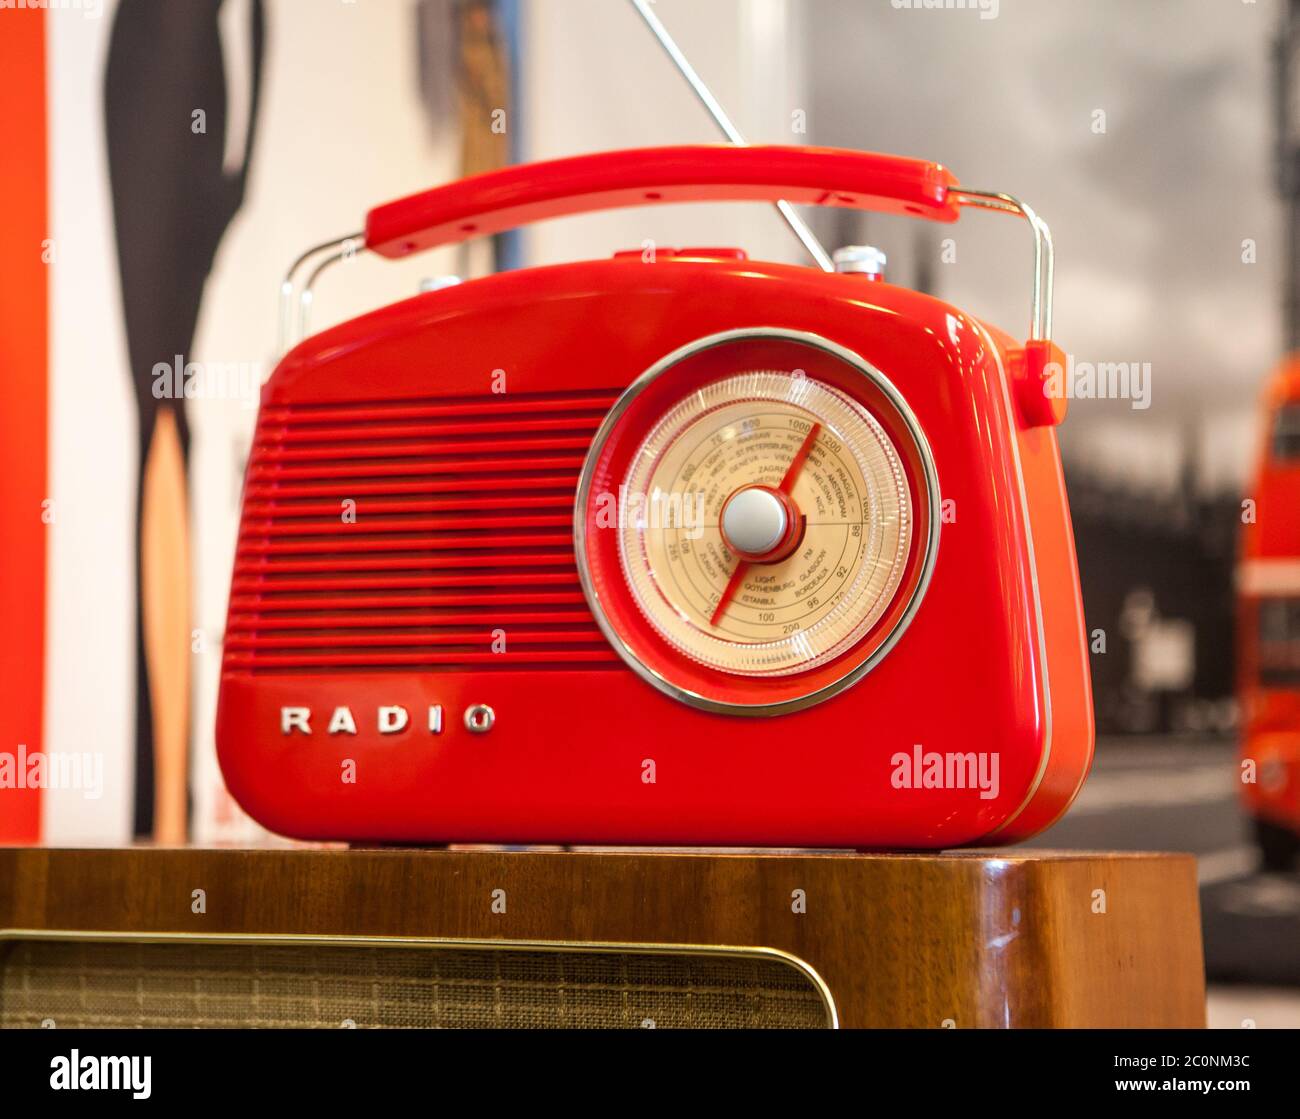 autoradio retro rossa su sfondo chiaro Foto stock - Alamy